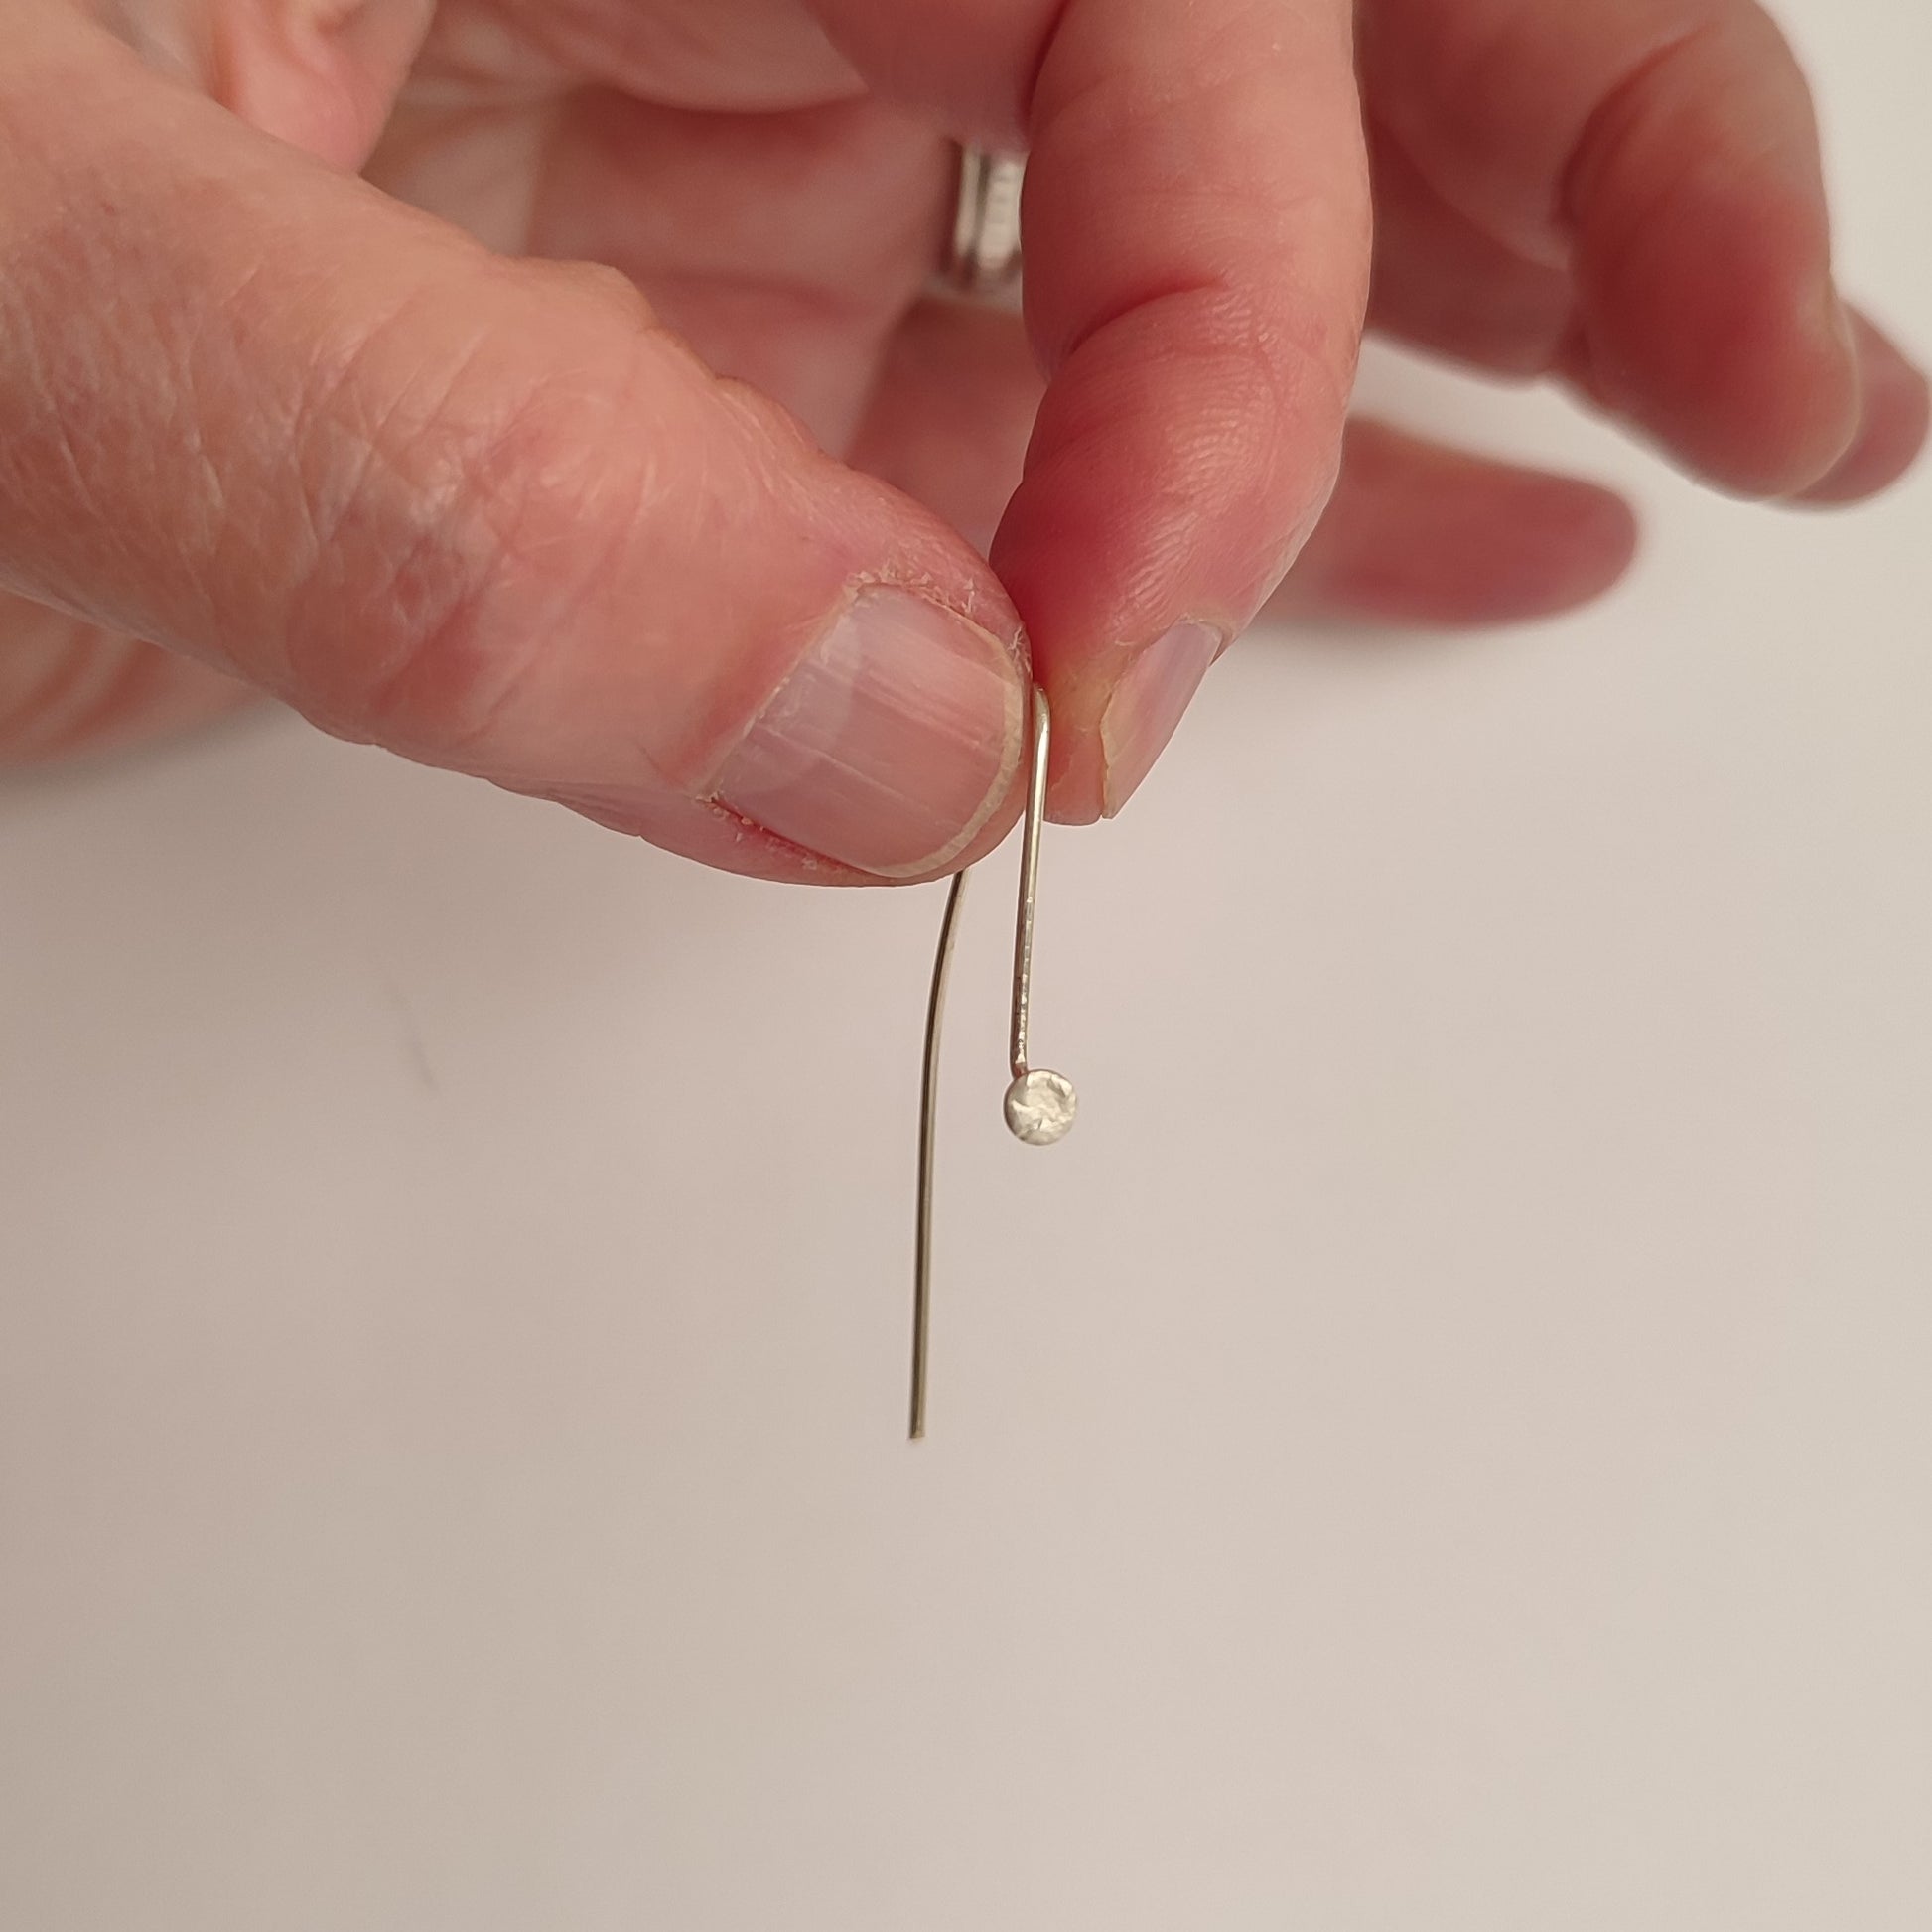 Maker's hand holding a silver earrings hook